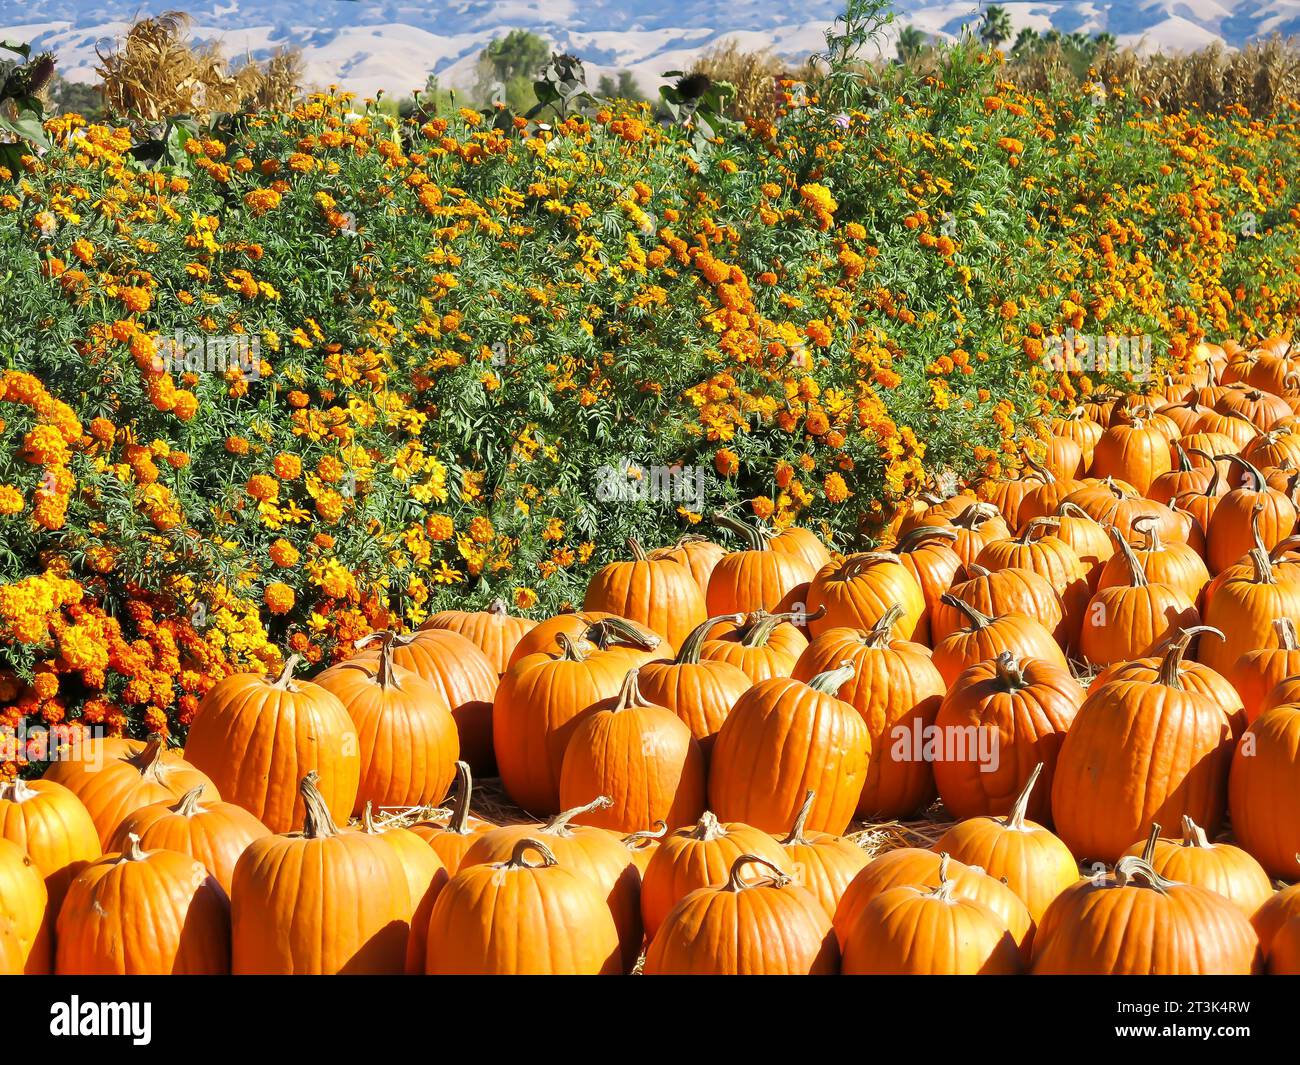 Pumpkins on Display att Base of Flowers Stock Photo